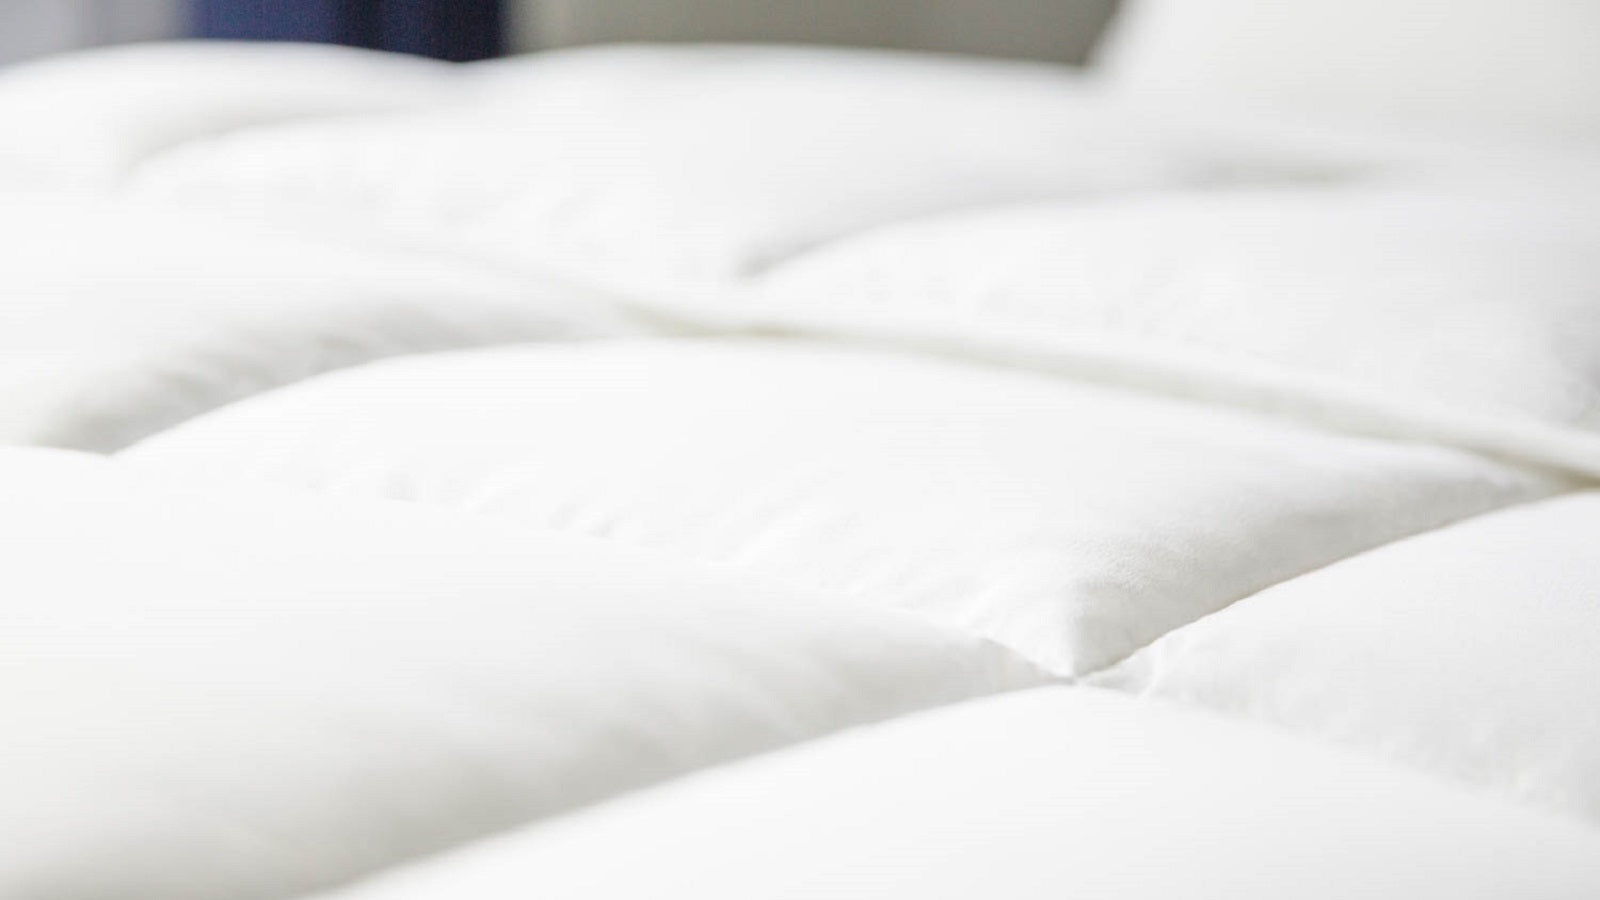 Down Alternative Microfiber Blend Comforter - Ultimate Comfort Sleep